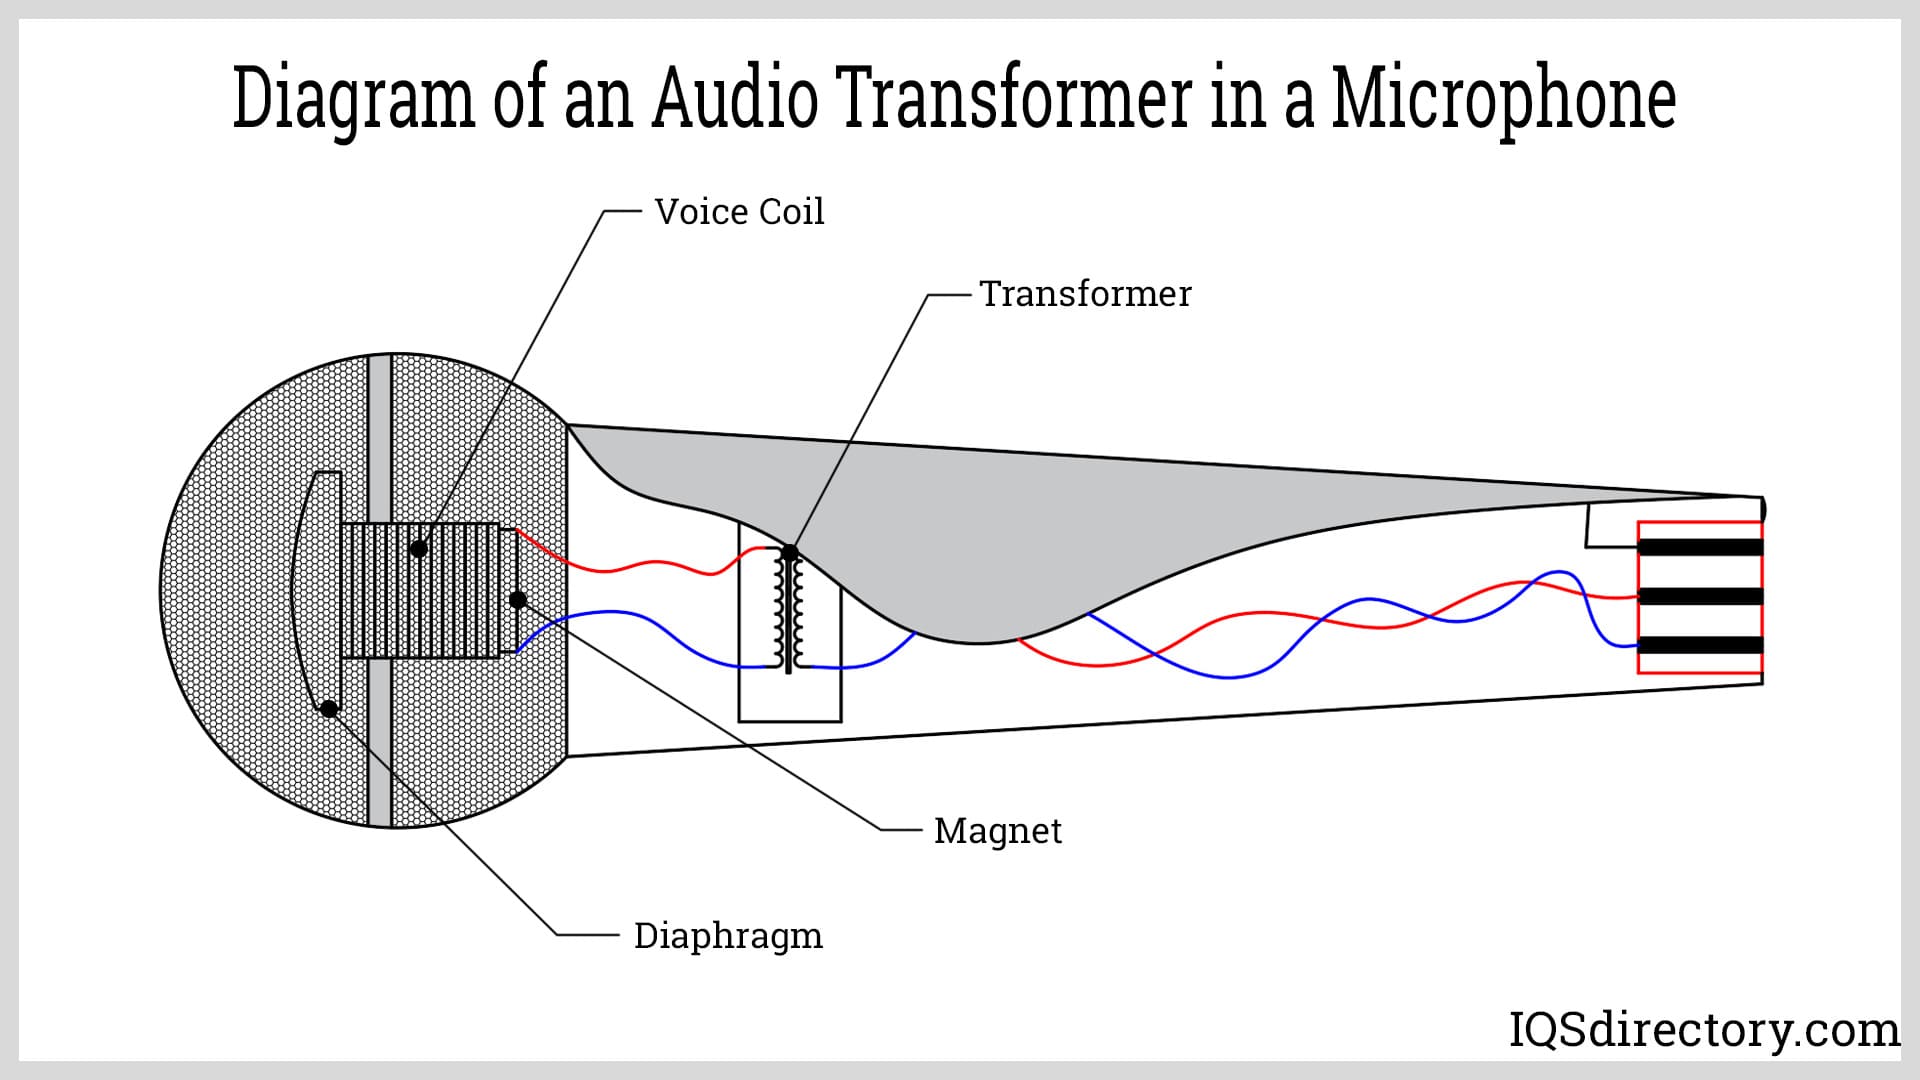 Diagram of an Audio Transformer in a Microphone